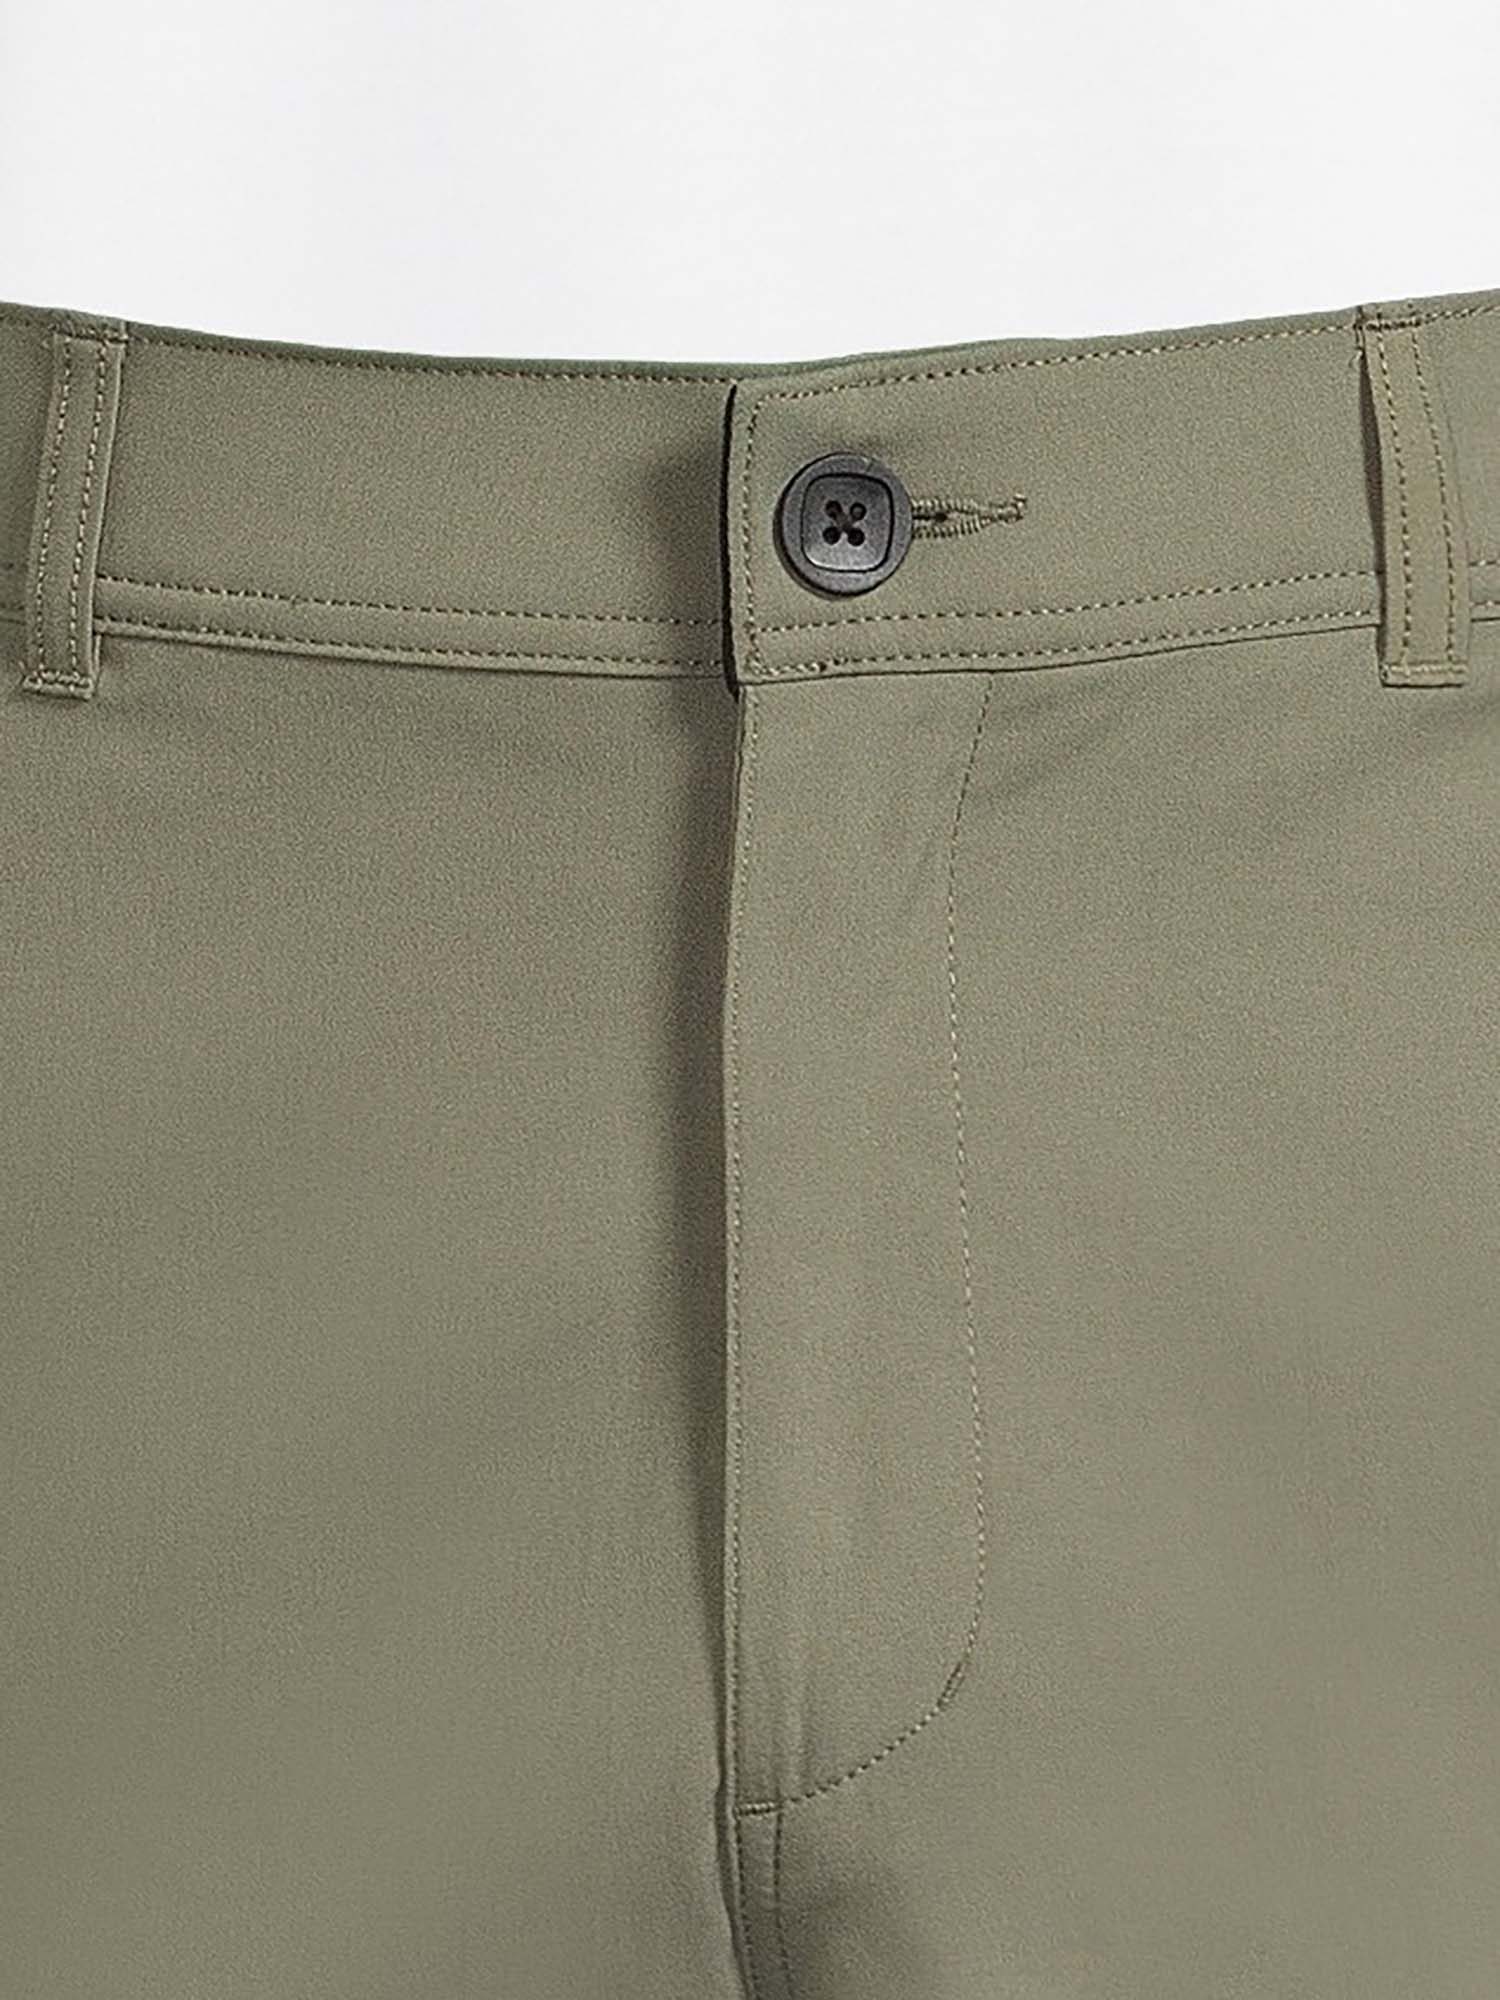 George Men's Synthetic Casual Pants - Walmart.com